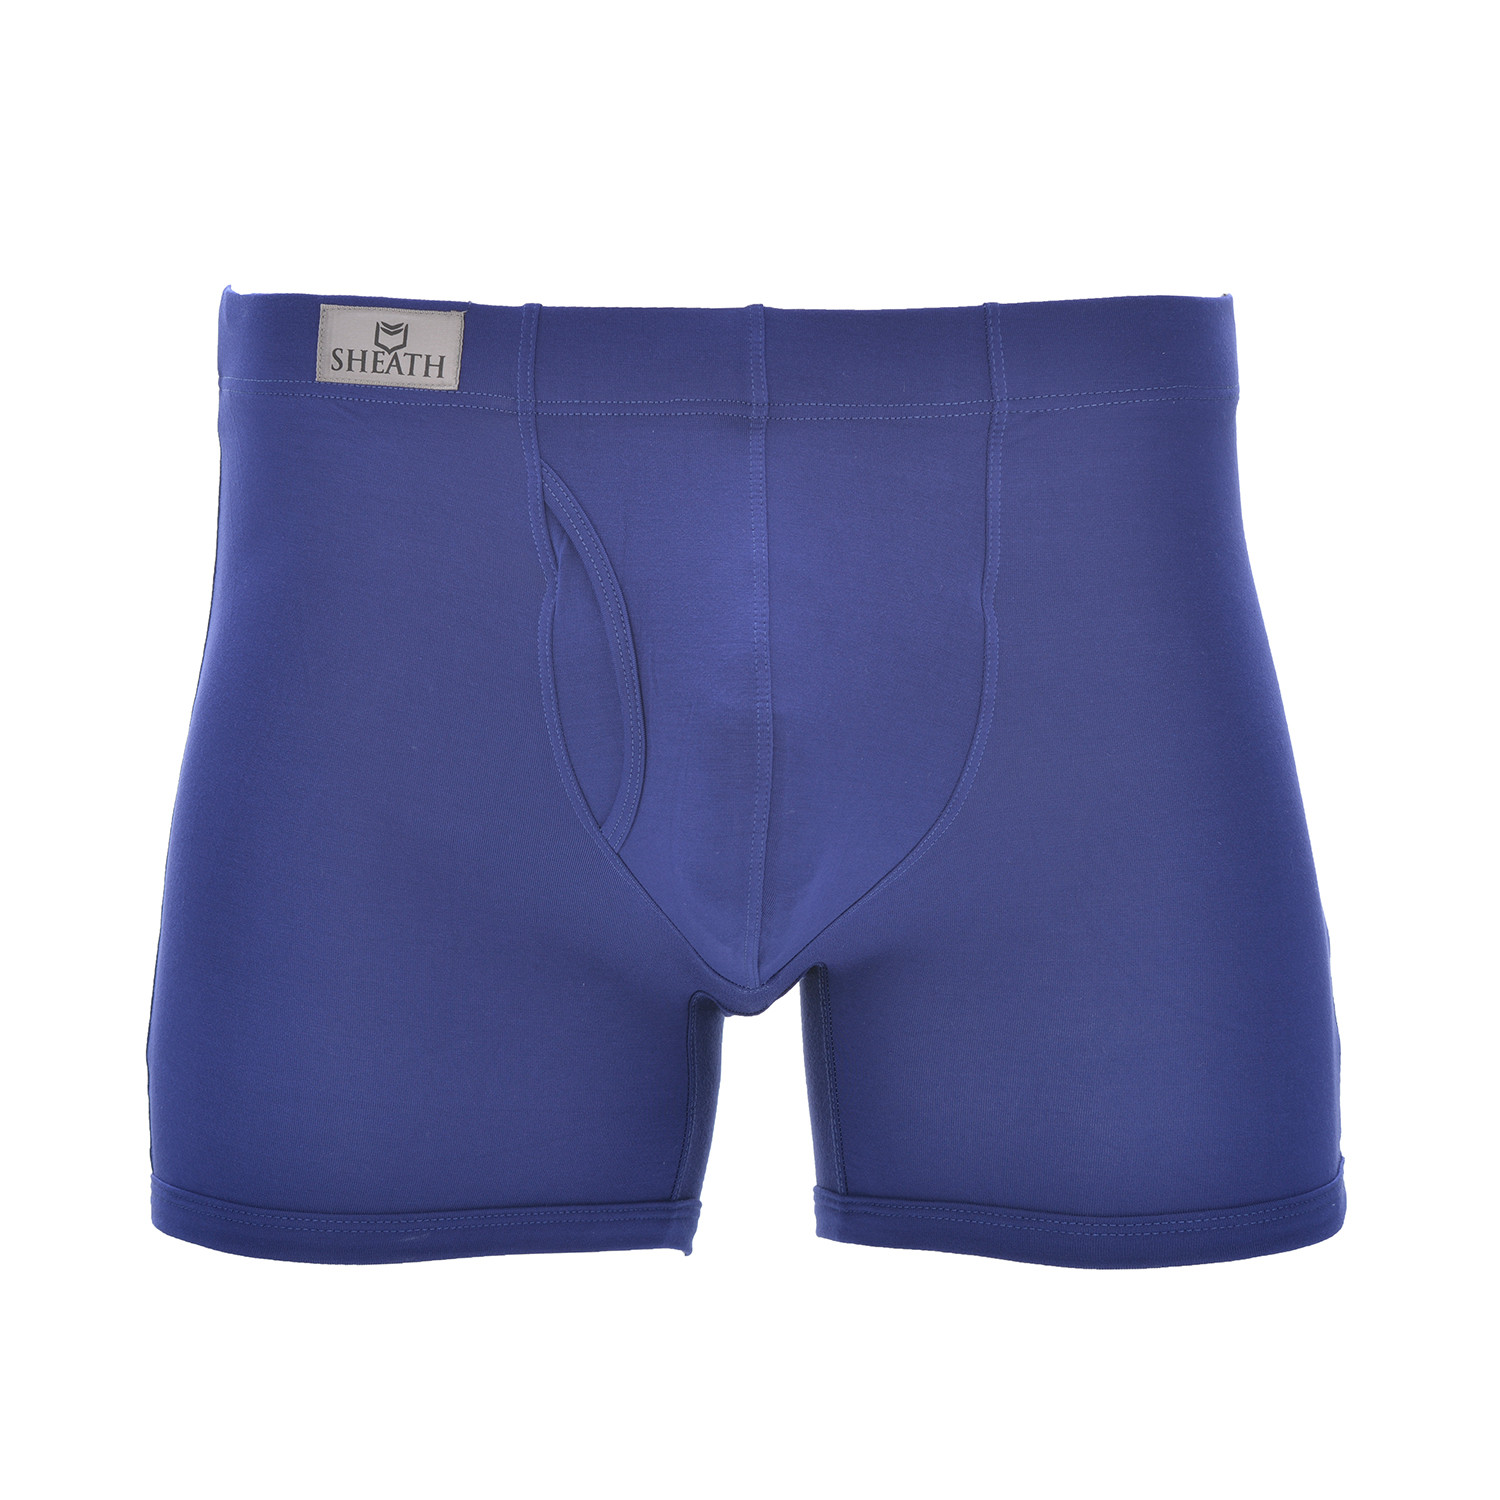 Sheath 3.21 Men's Dual Pouch Fly Underwear // Navy (Large) - Sheath ...